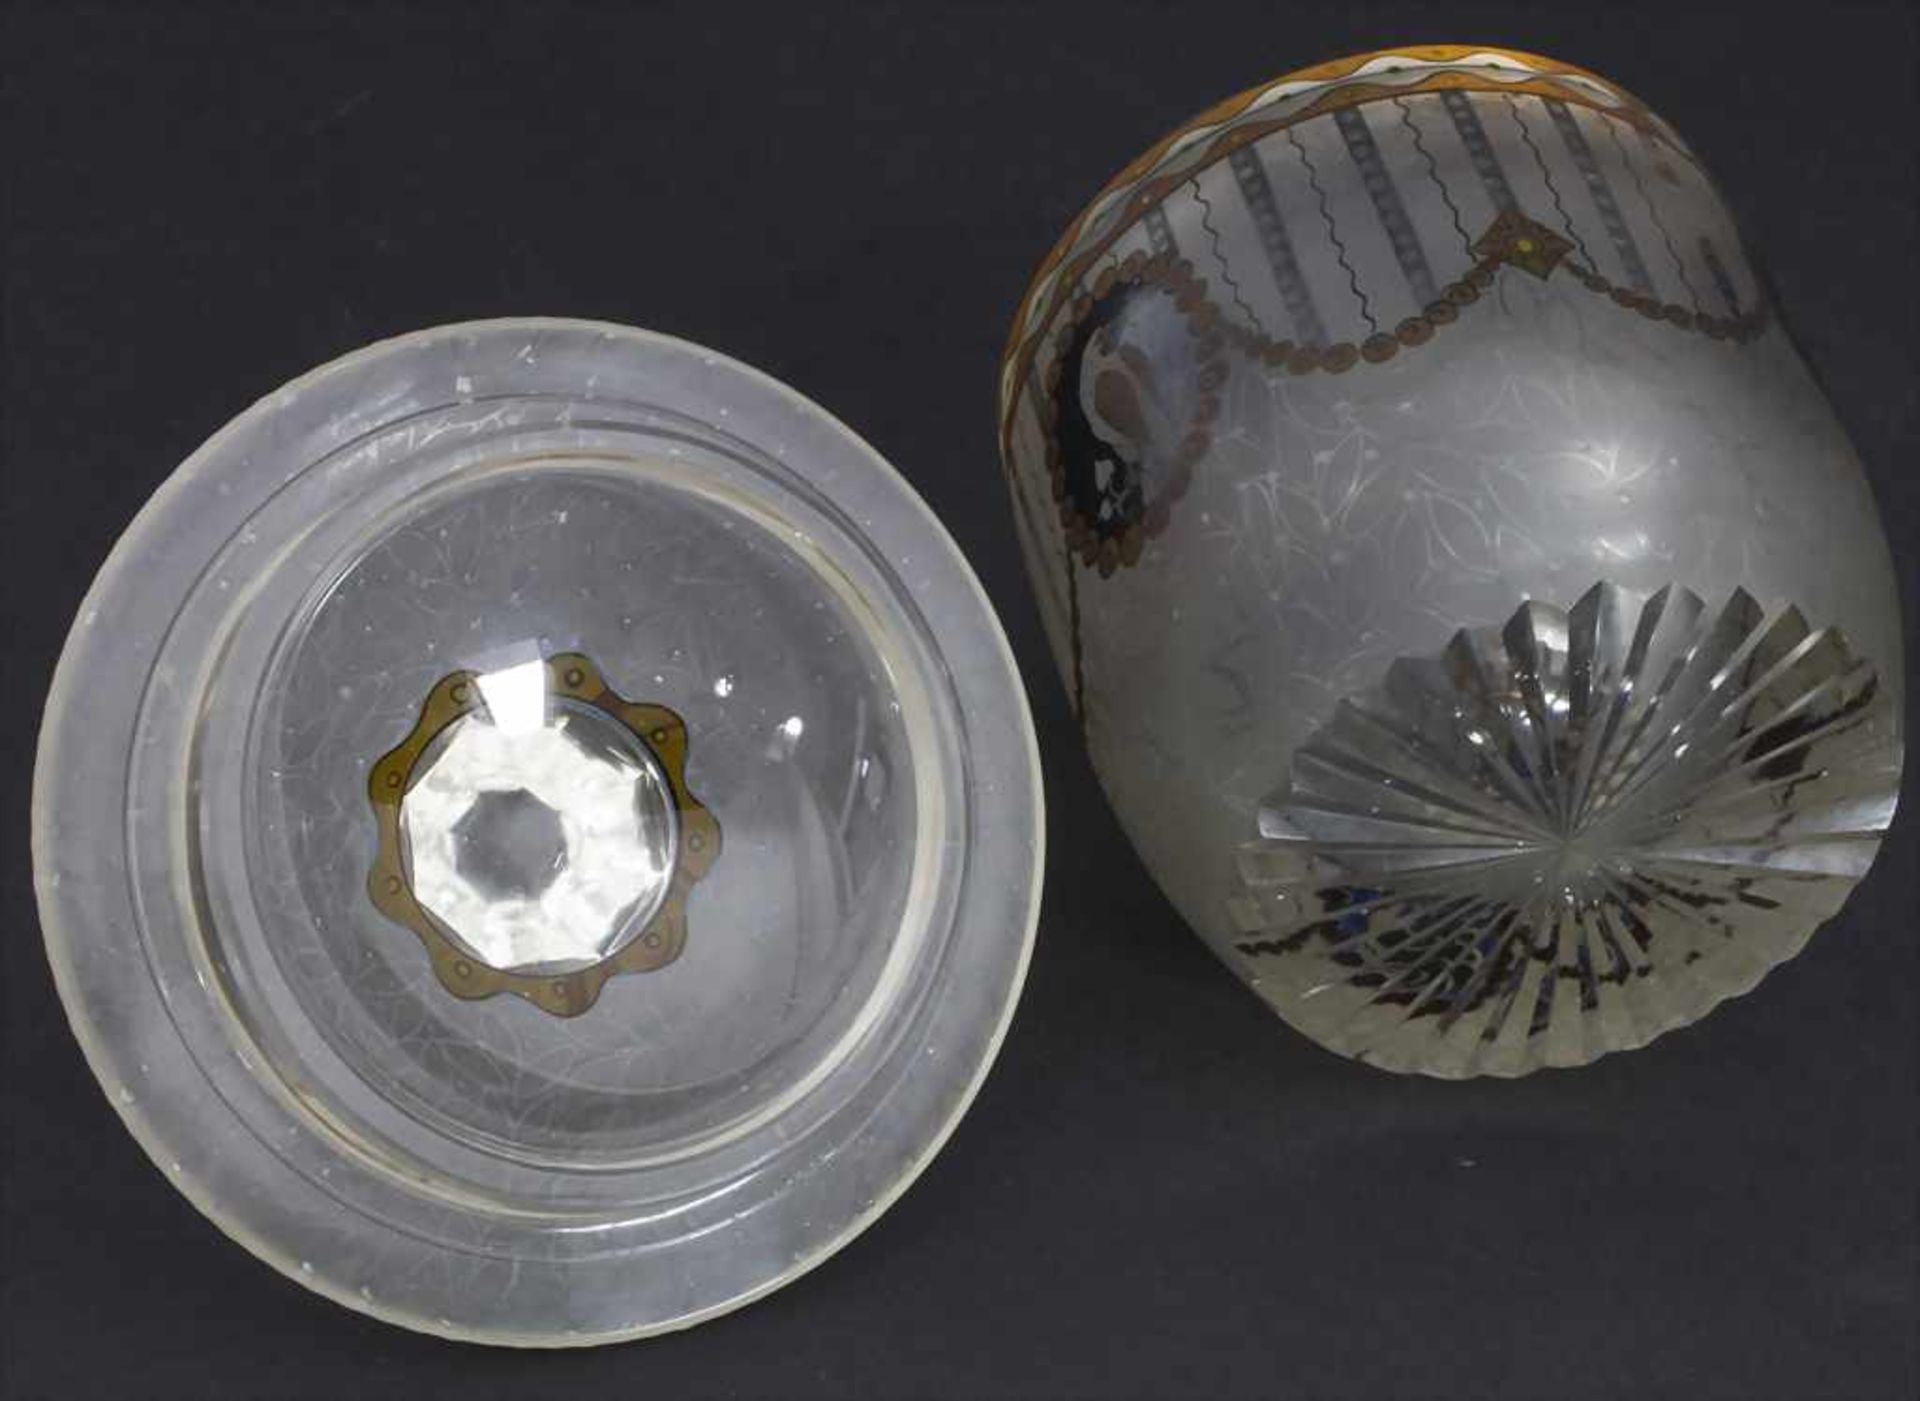 Jugendstil Deckelgefäß mit Transparentemaildekor / An Art Nouveau covered bowl with transparent - Bild 5 aus 5